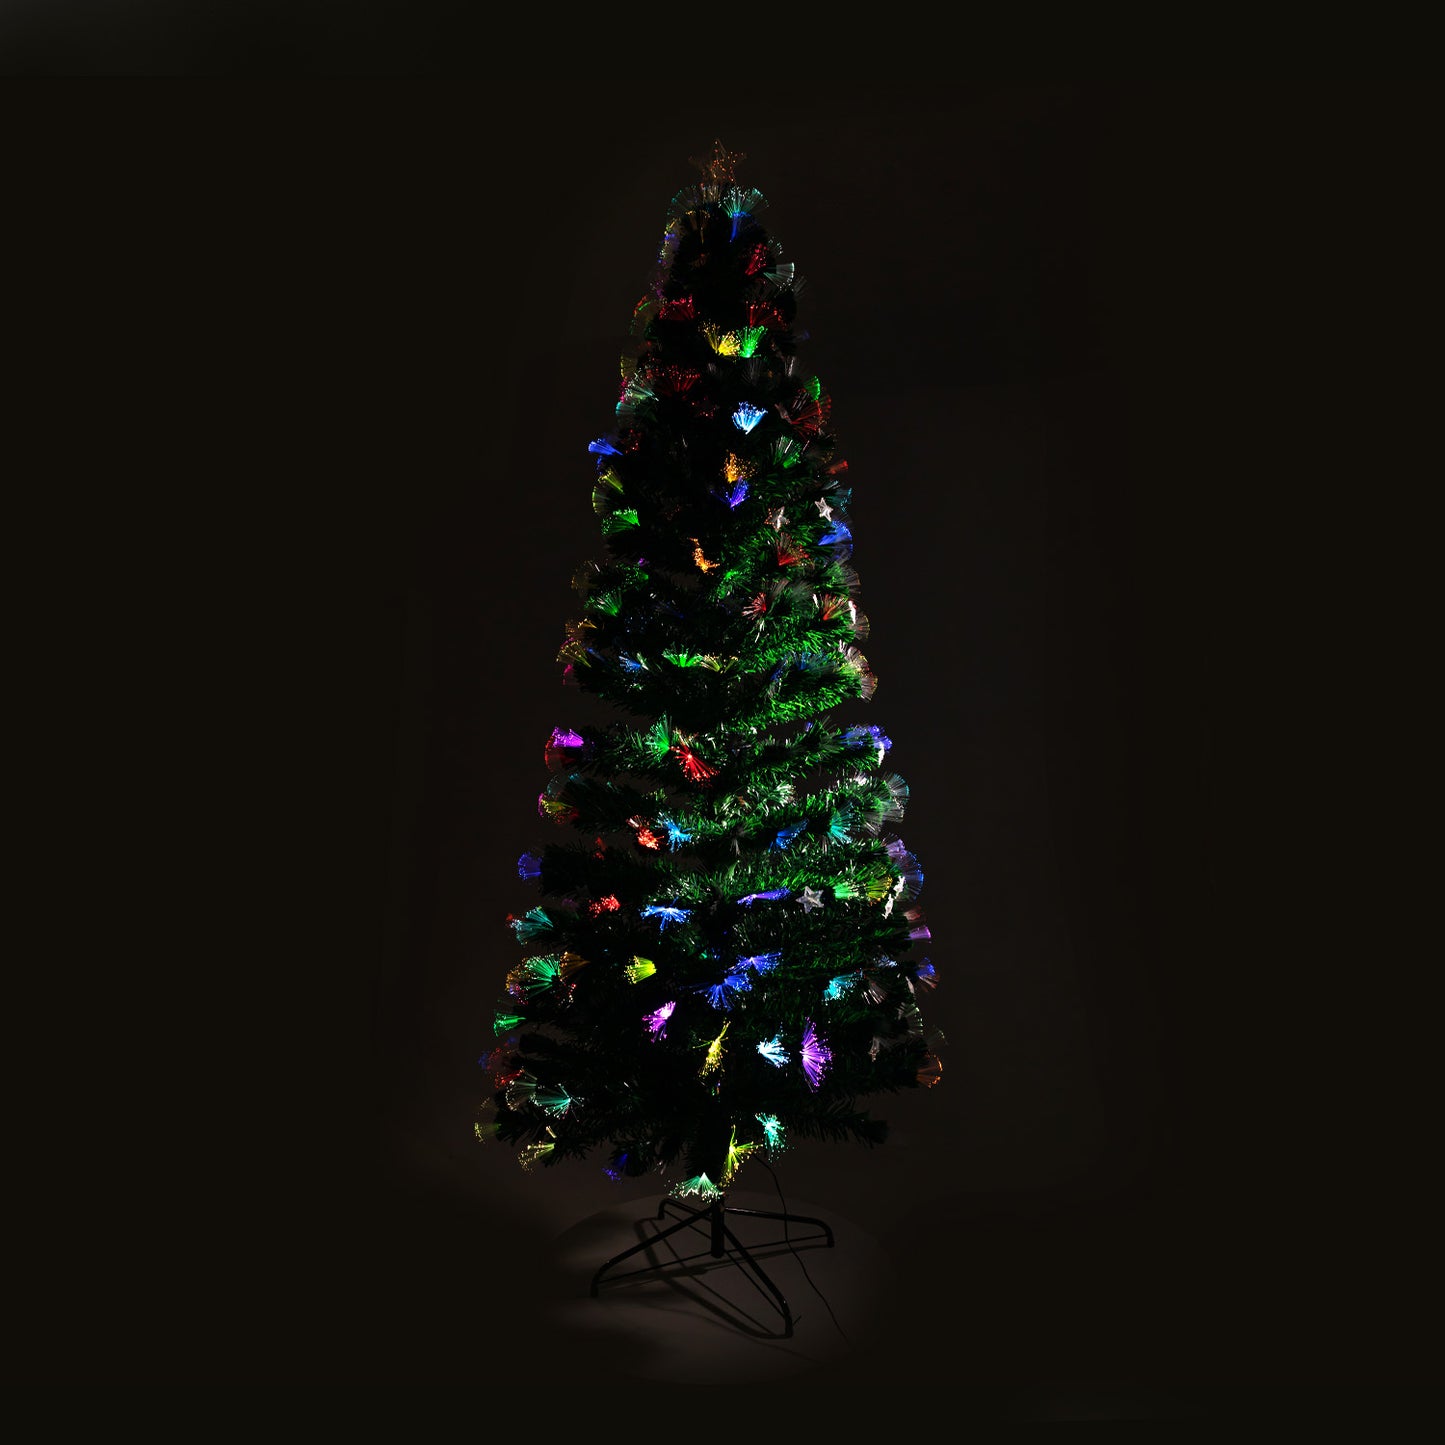 Christabelle 2.1m Enchanted Pre Lit Fibre Optic Christmas Tree